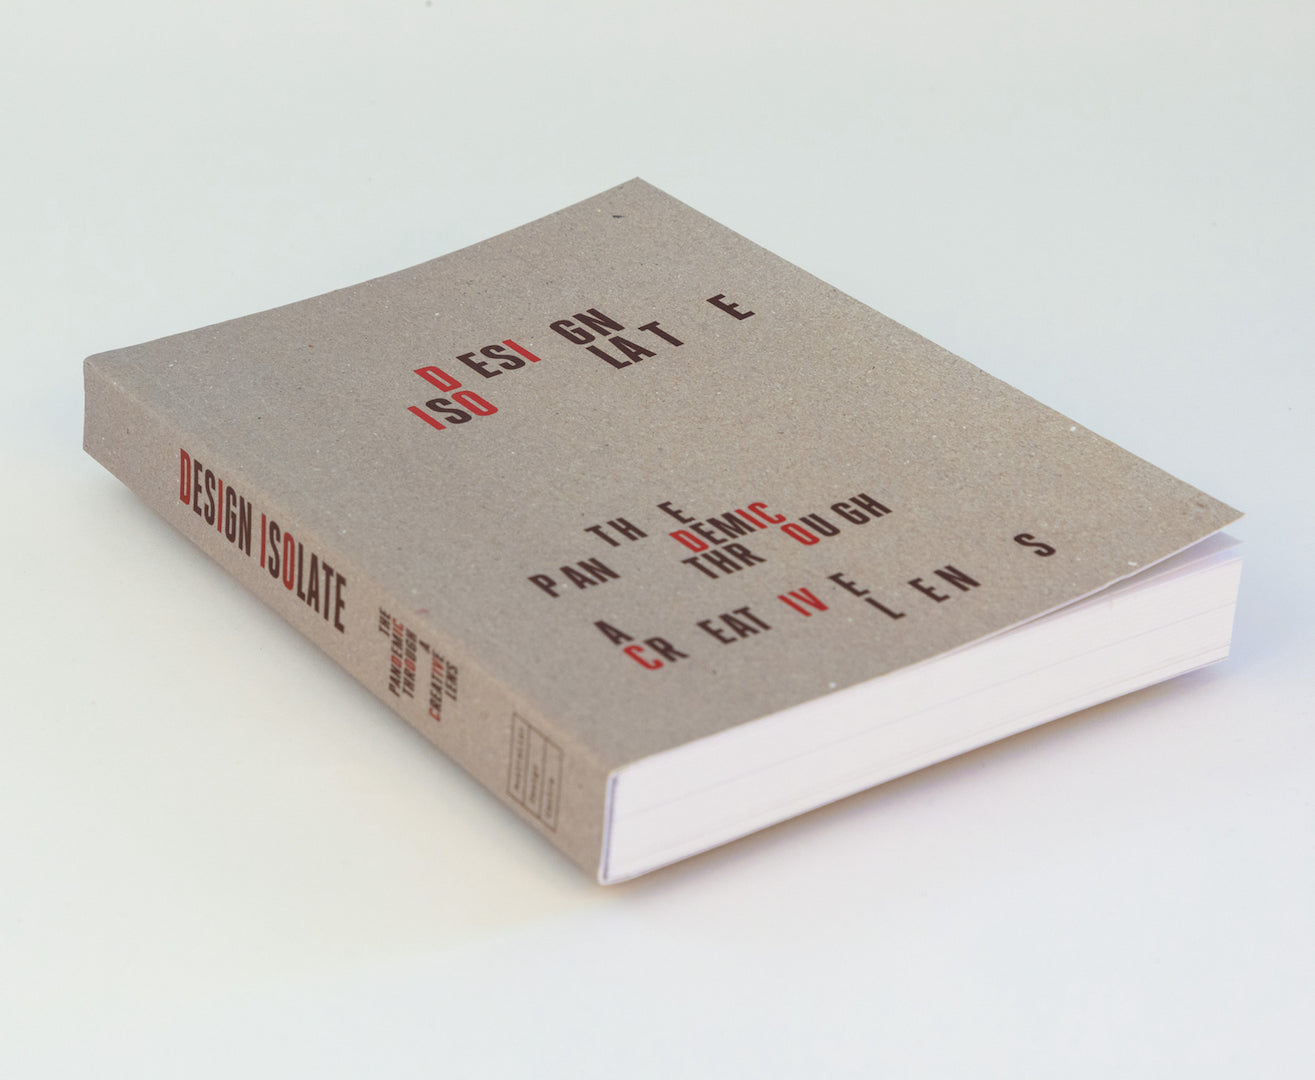 Book Design Isolate: The Pandemic Through a Creative Lens